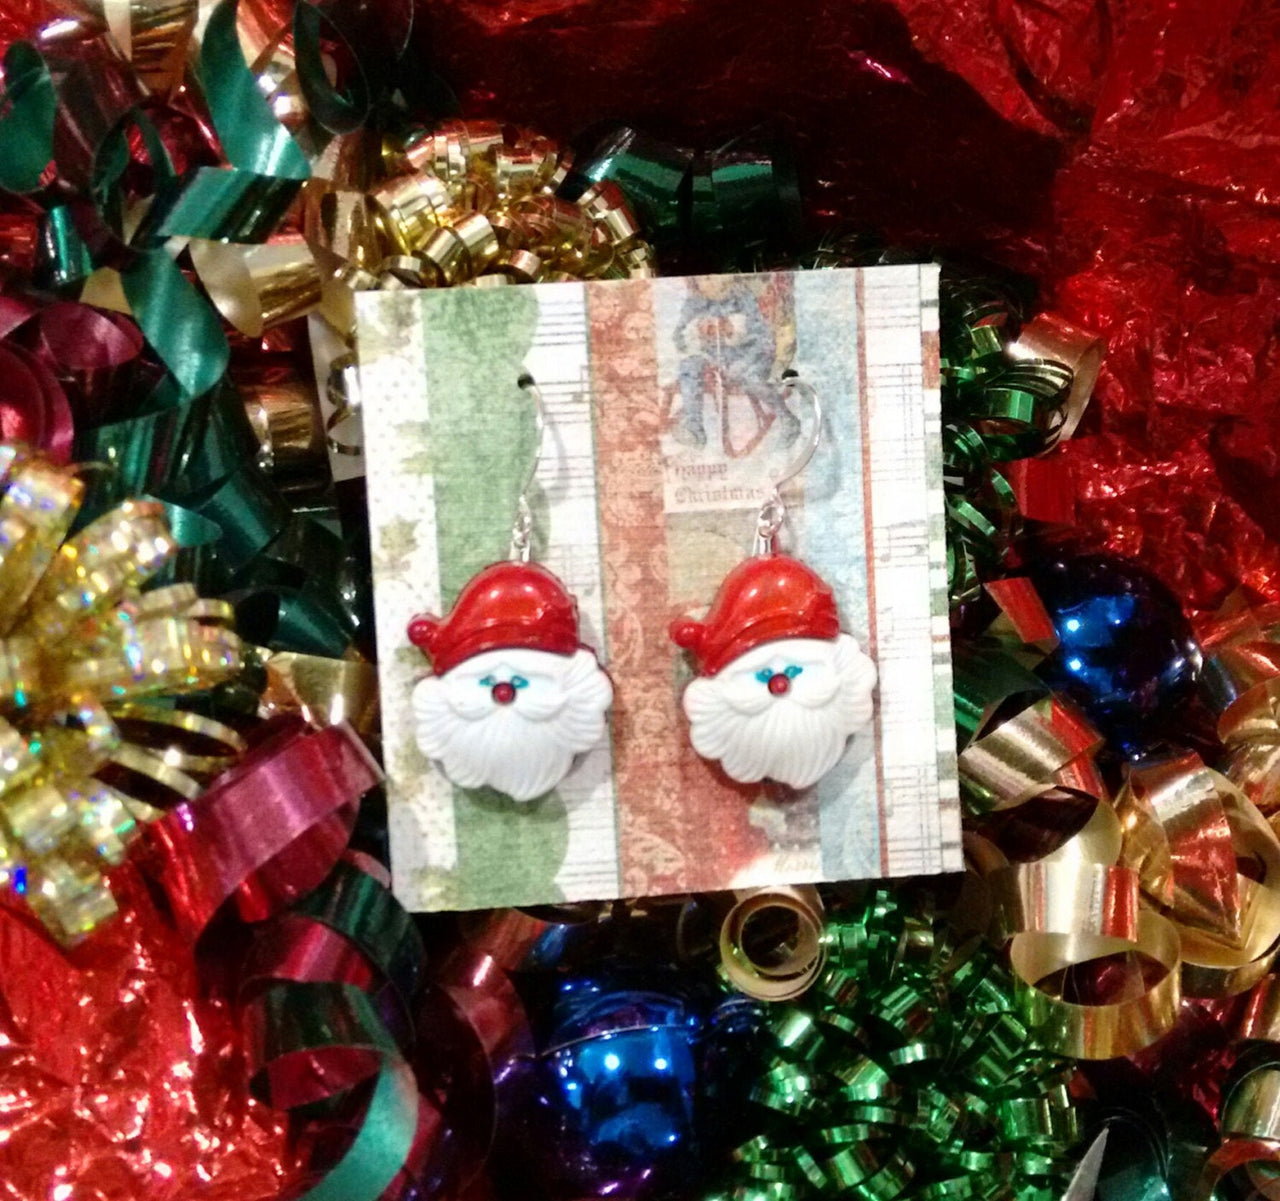 Santa Claus earrings